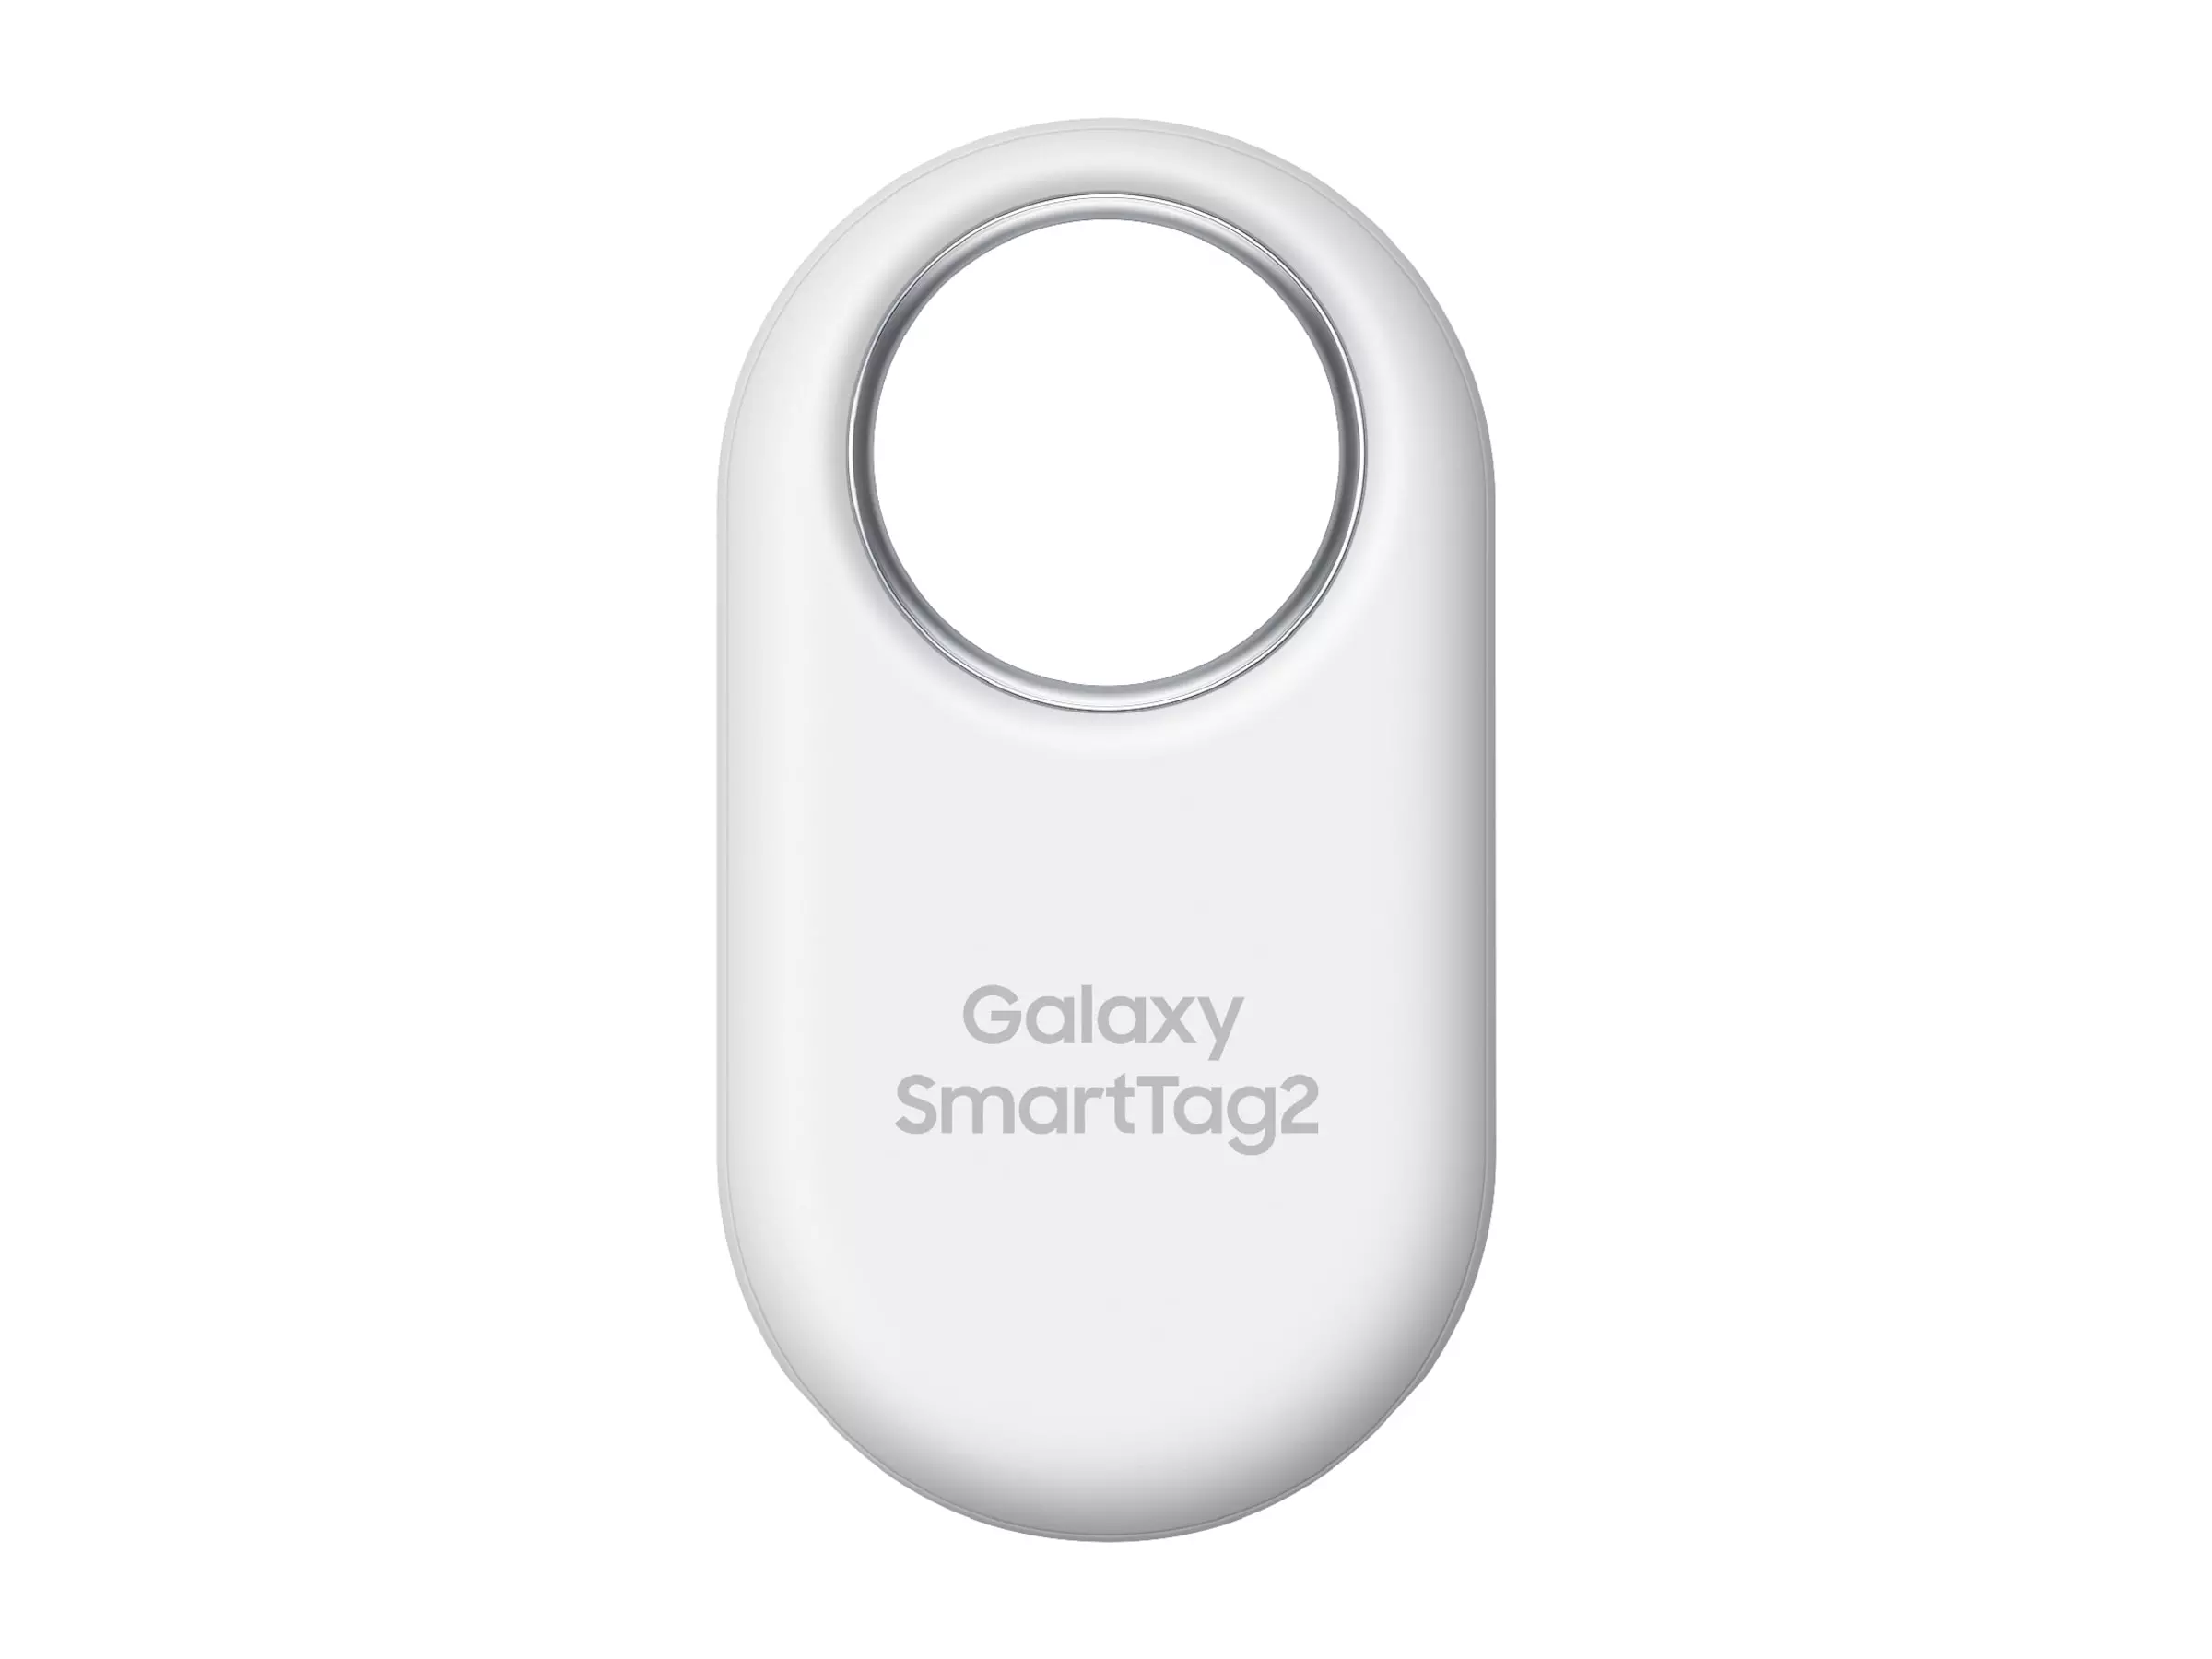 Samsung Galaxy Smarttag2 White